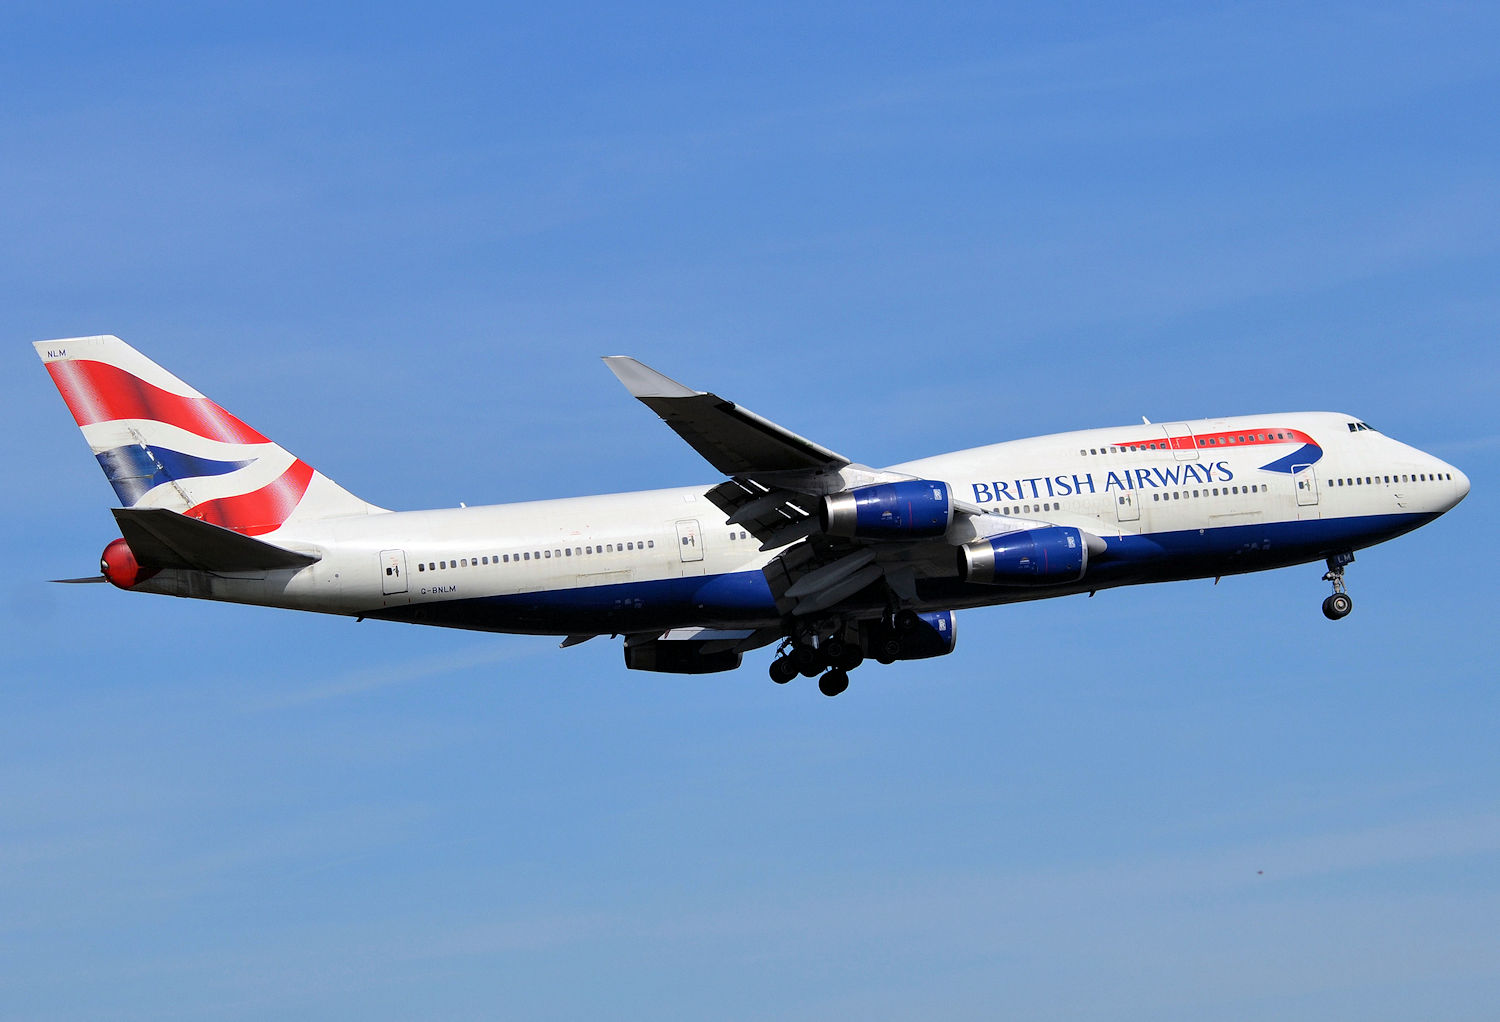 G-BNLM/GBNLM Withdrawn from use Boeing 747 Airframe Information - AVSpotters.com